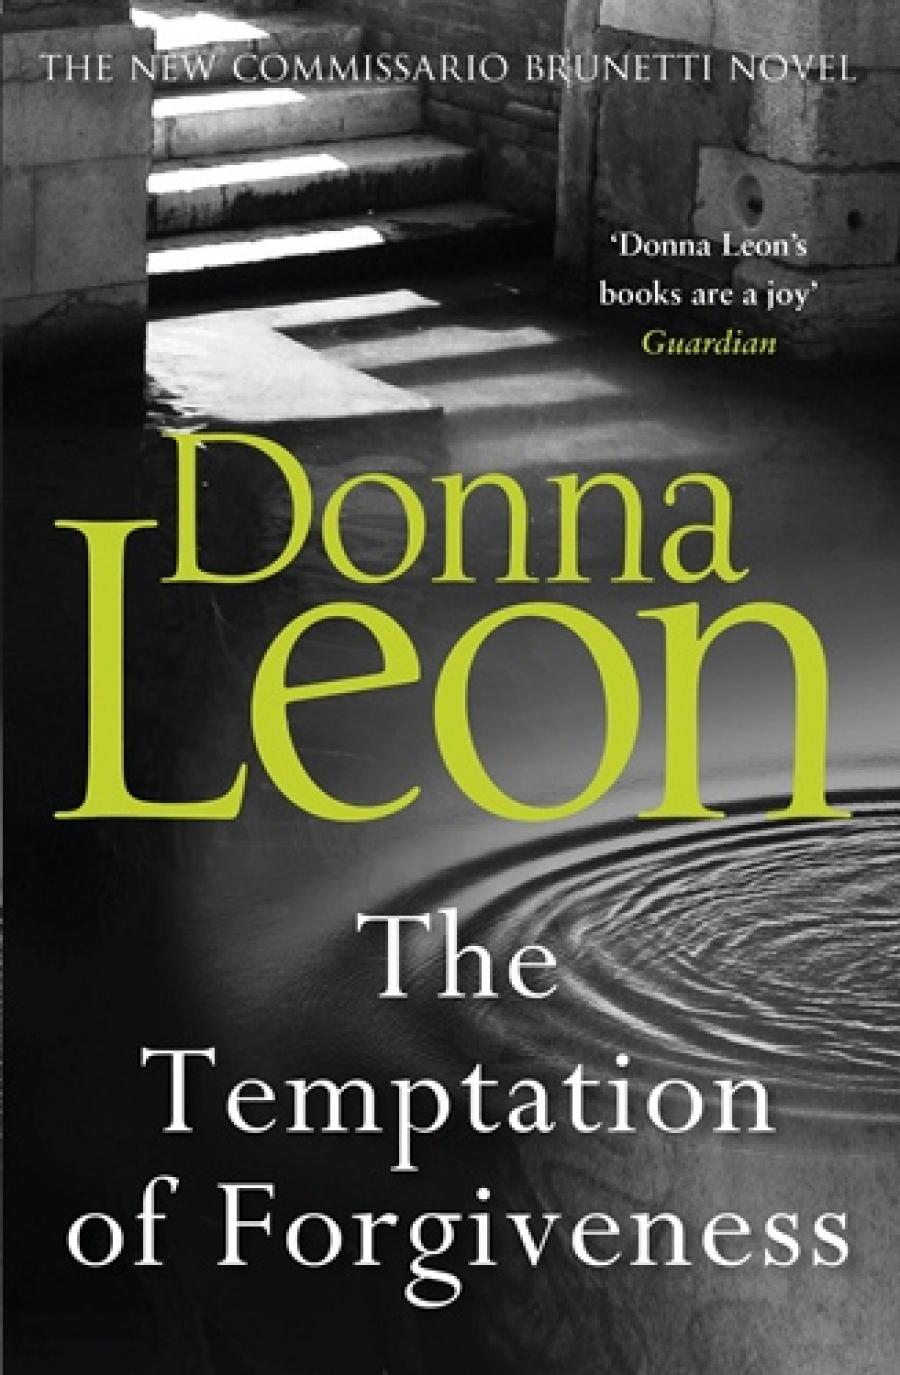 Leon Donna The Temptation of Forgiveness 